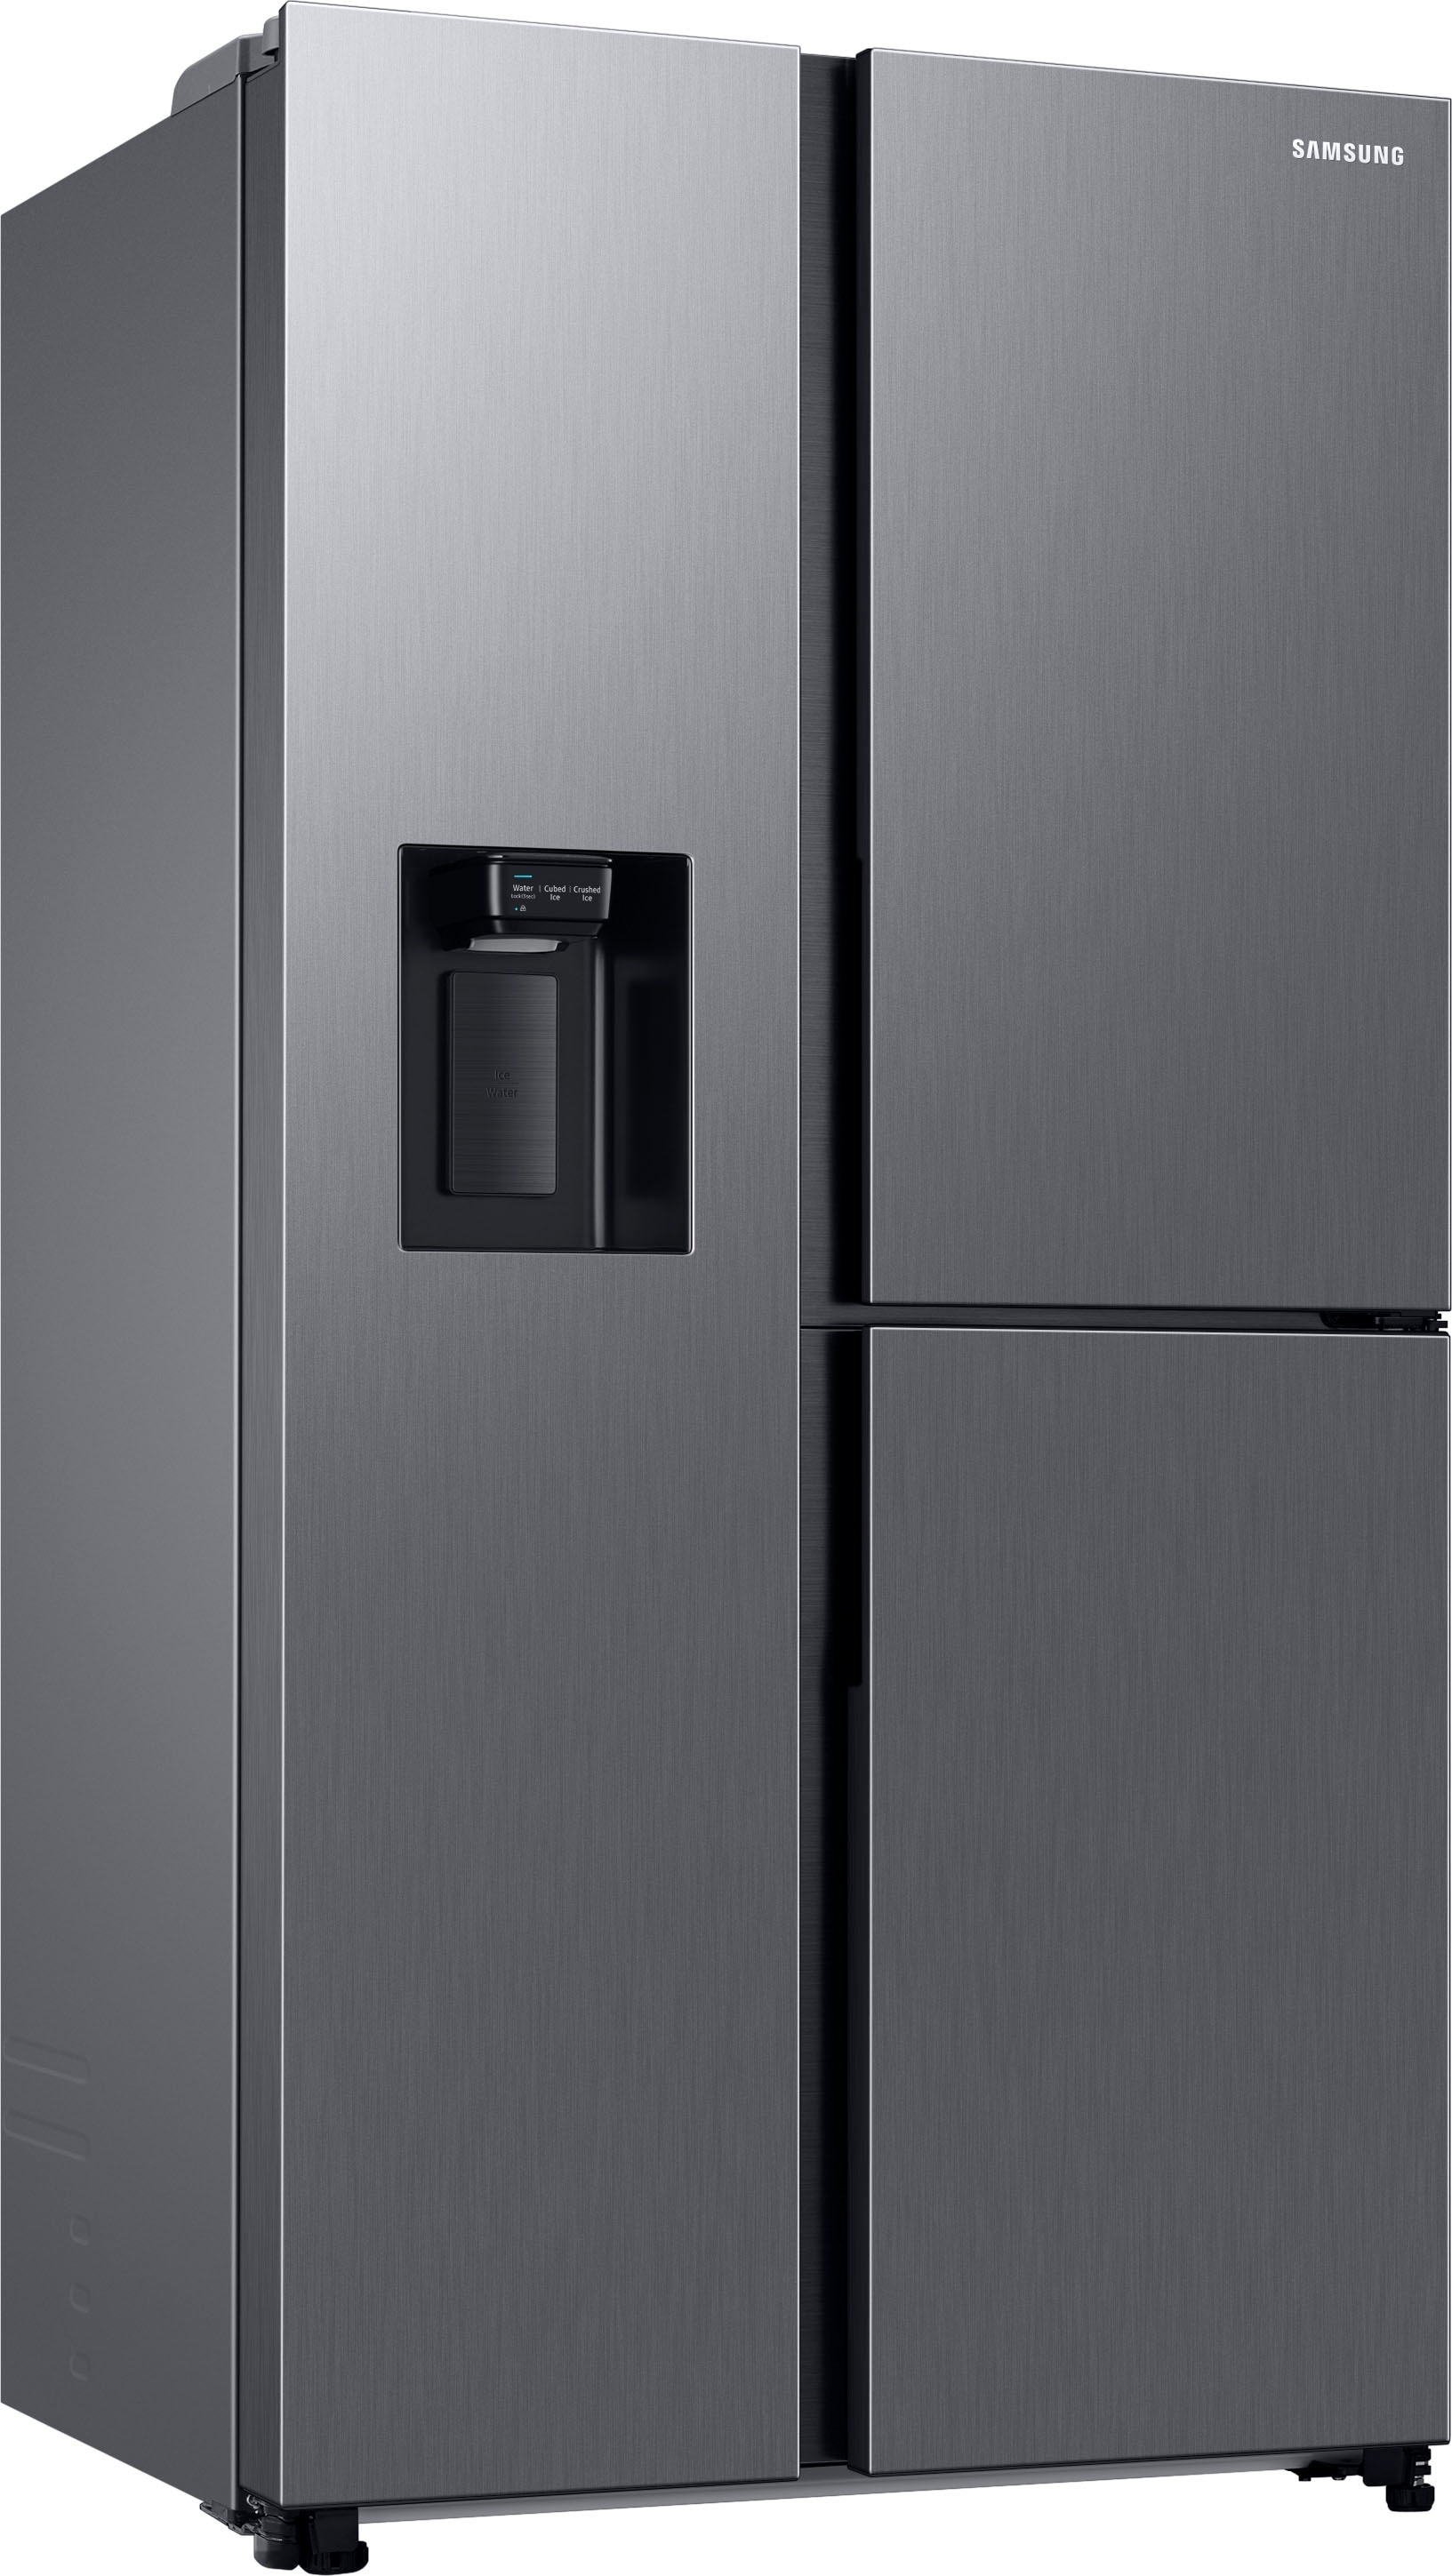 E (A bis G) SAMSUNG Side-by-Side Kühlschränke silberfarben (edelstahl optik) Kühl-Gefrierkombinationen